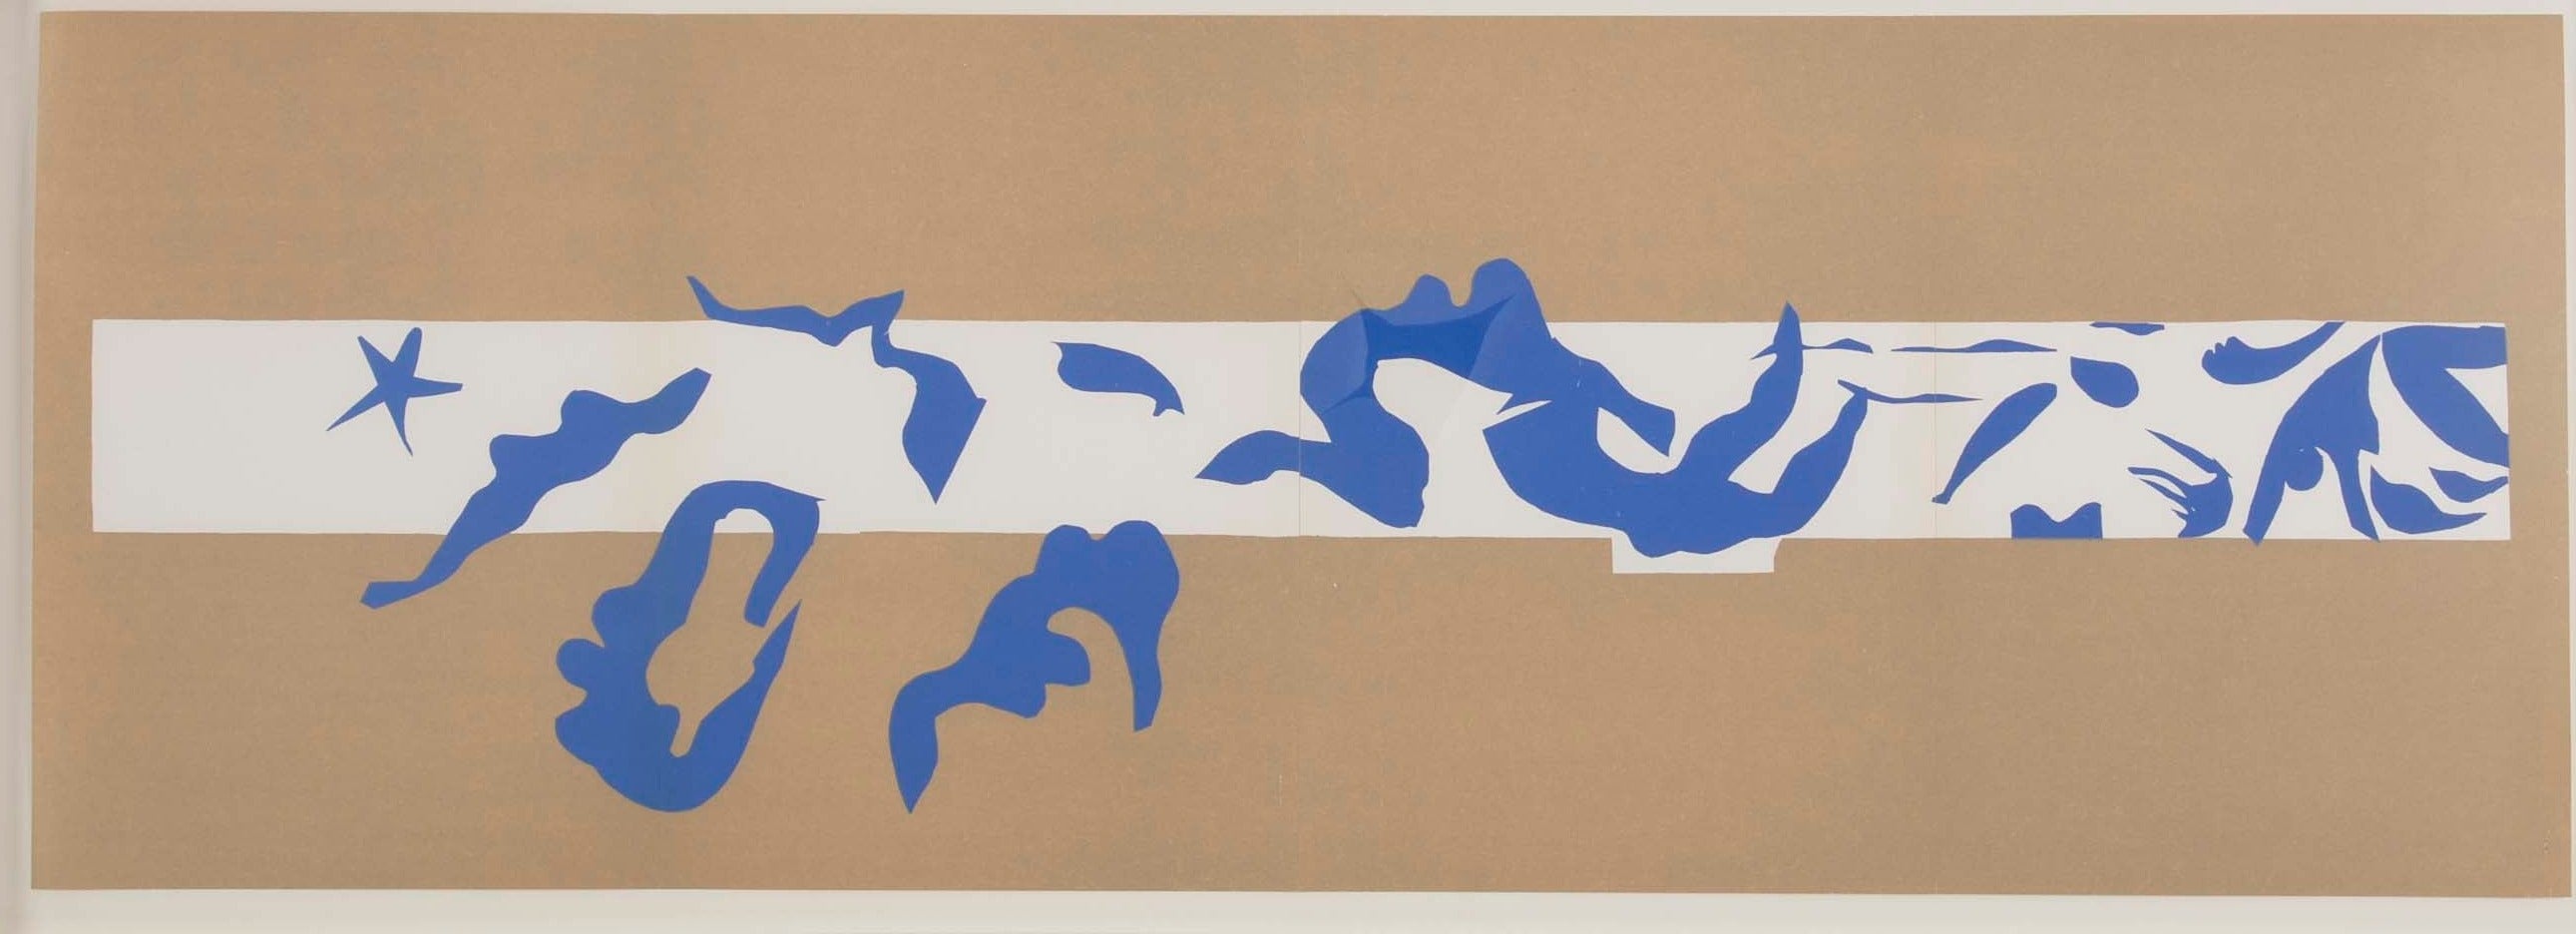 Henri Matisse Lithograph